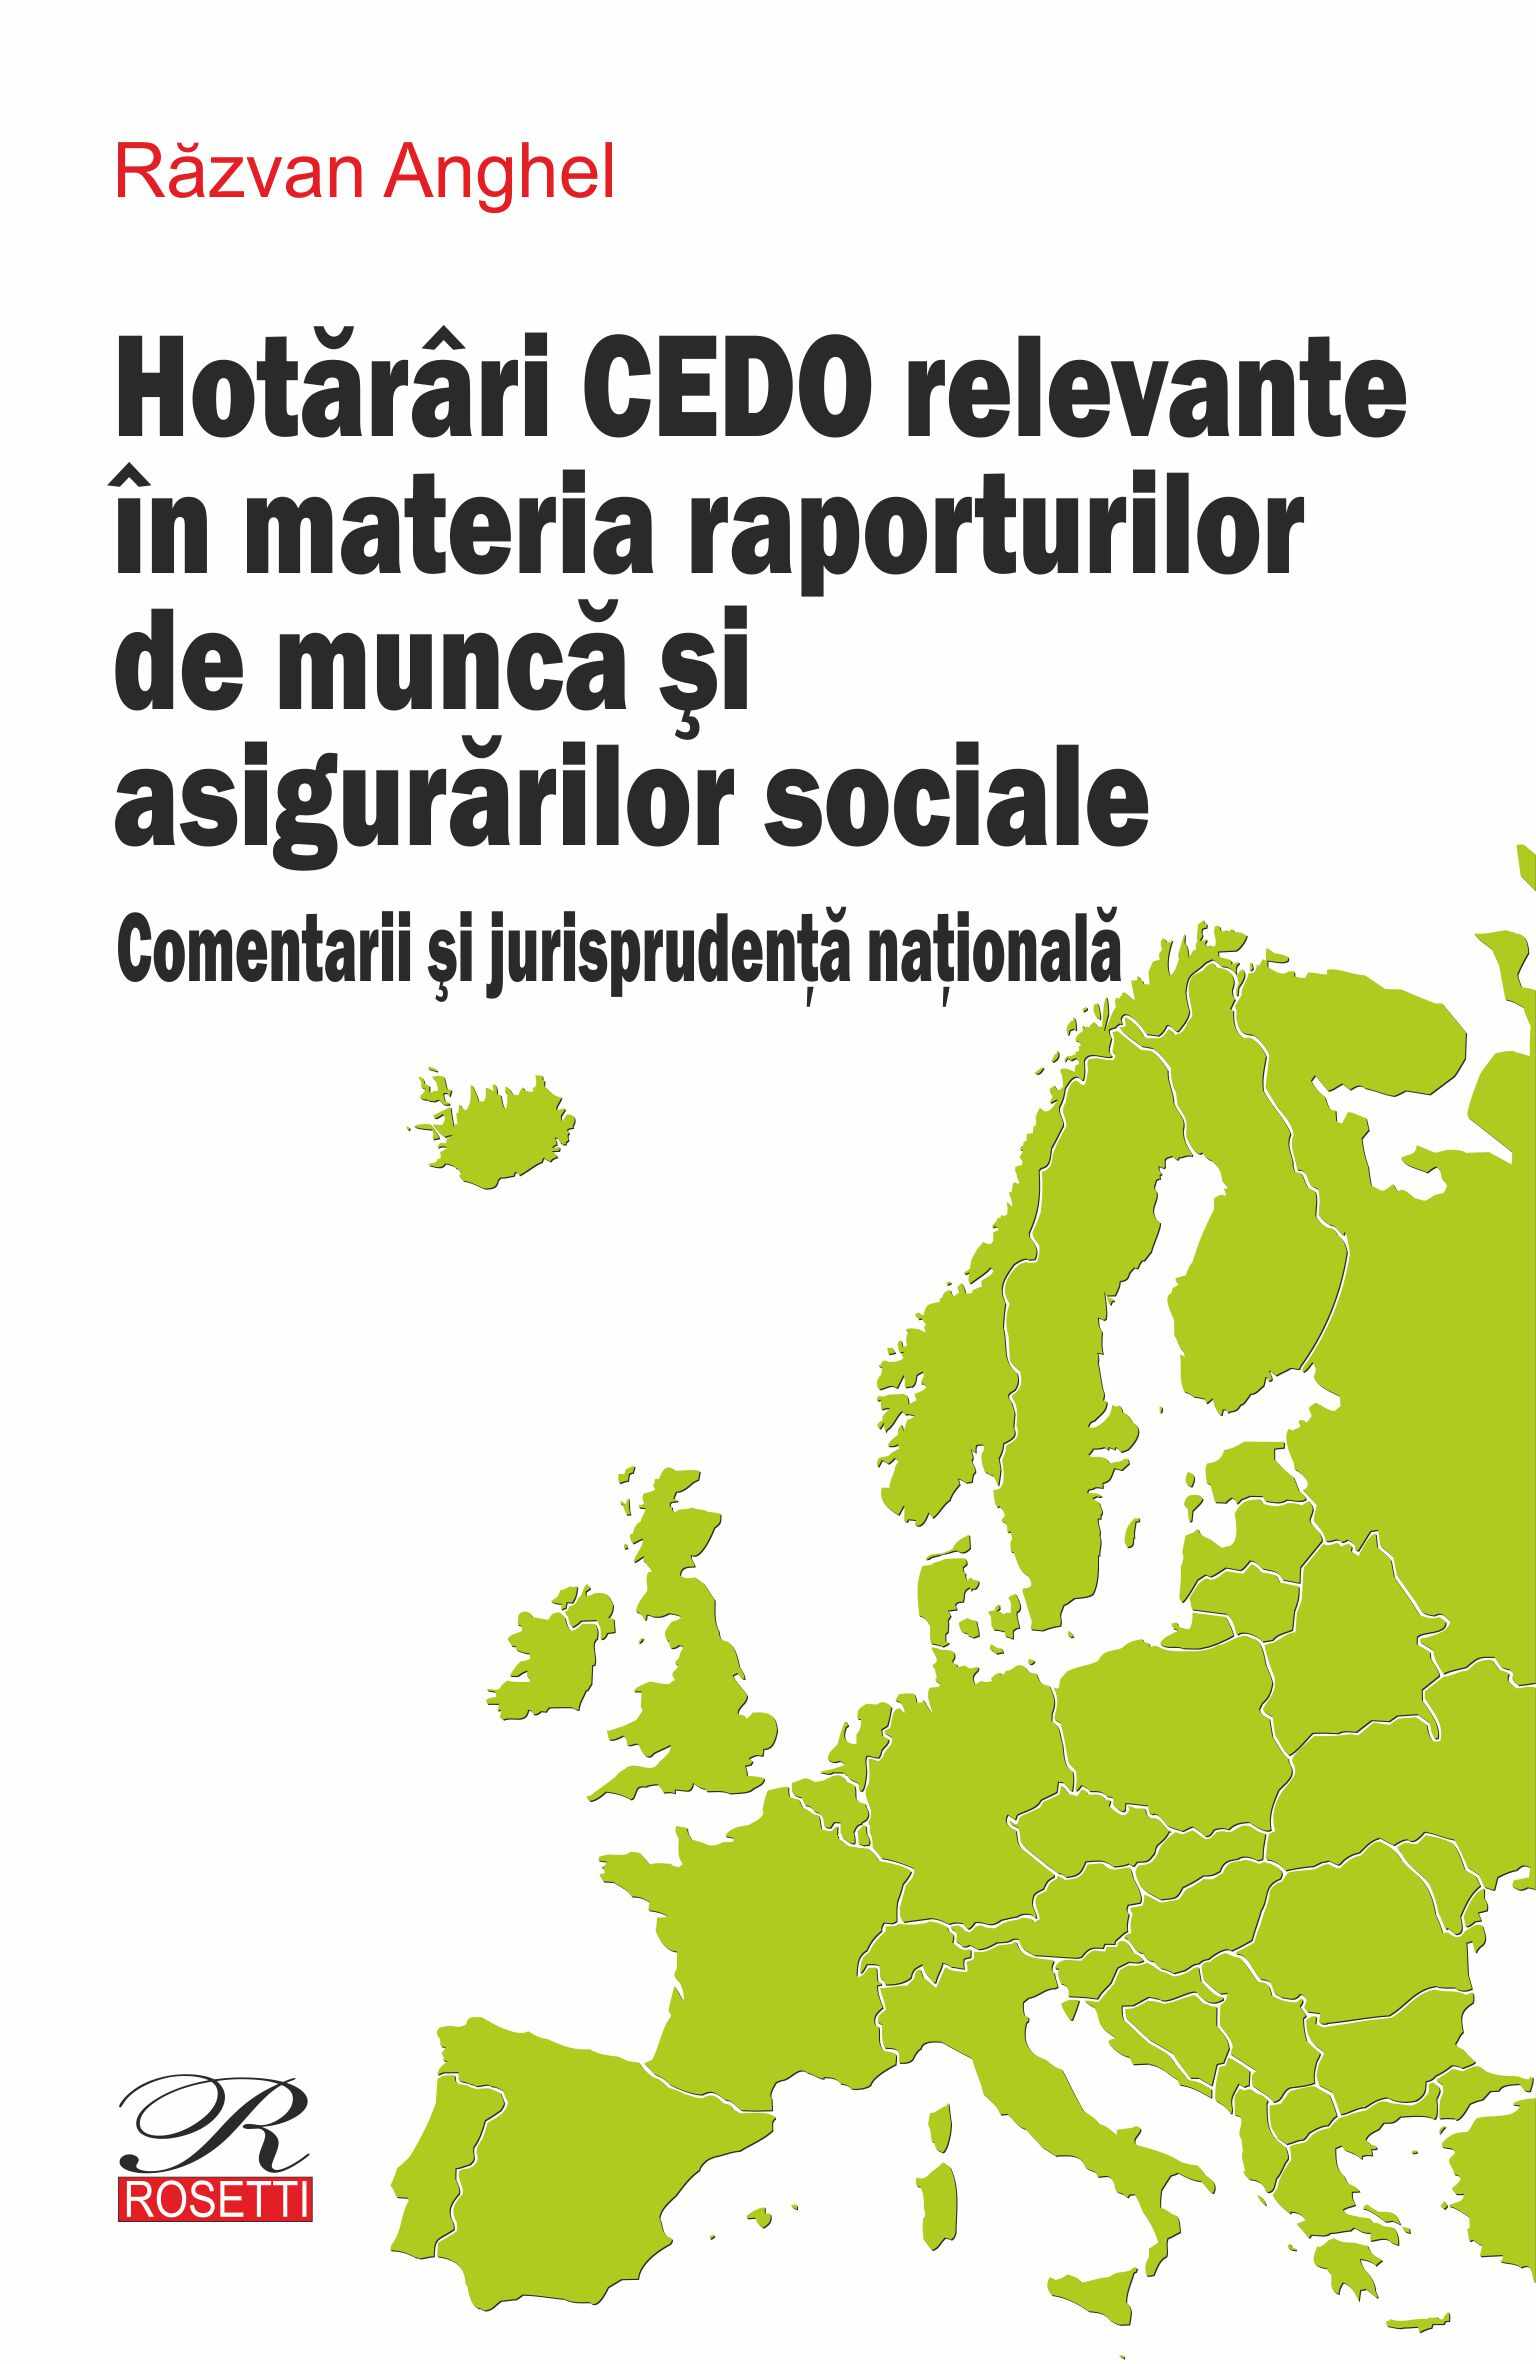 Hotarari CEDO relevante in materia raporturilor de munca si asigurarilor sociale | Razvan Anghel